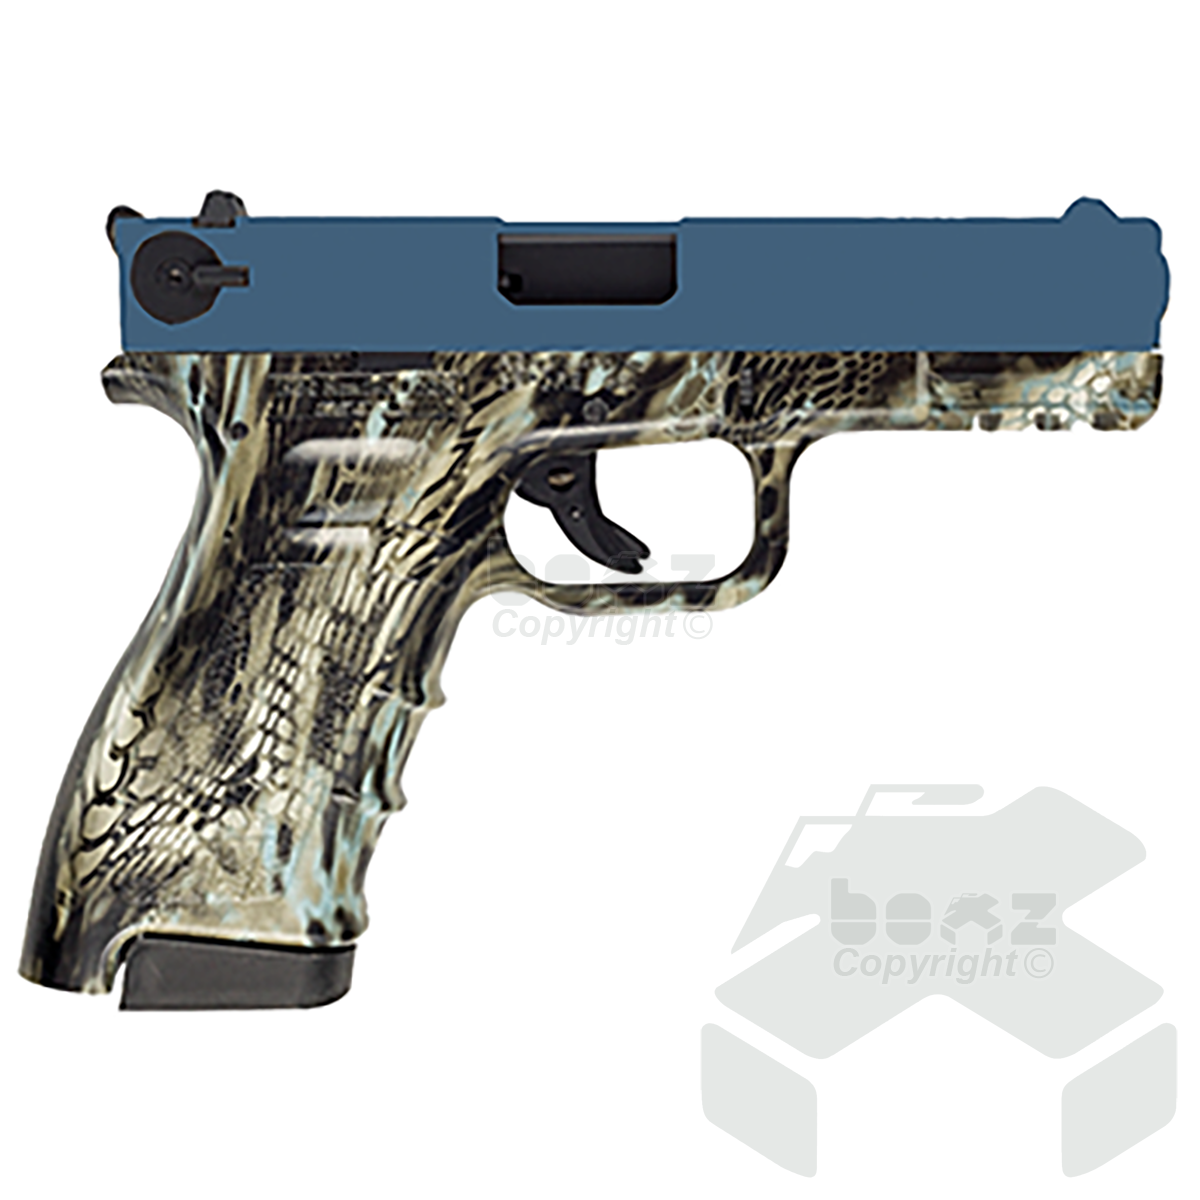 Ceonic M22 Blank Firing Pistol - 9mm - Blue Cobra